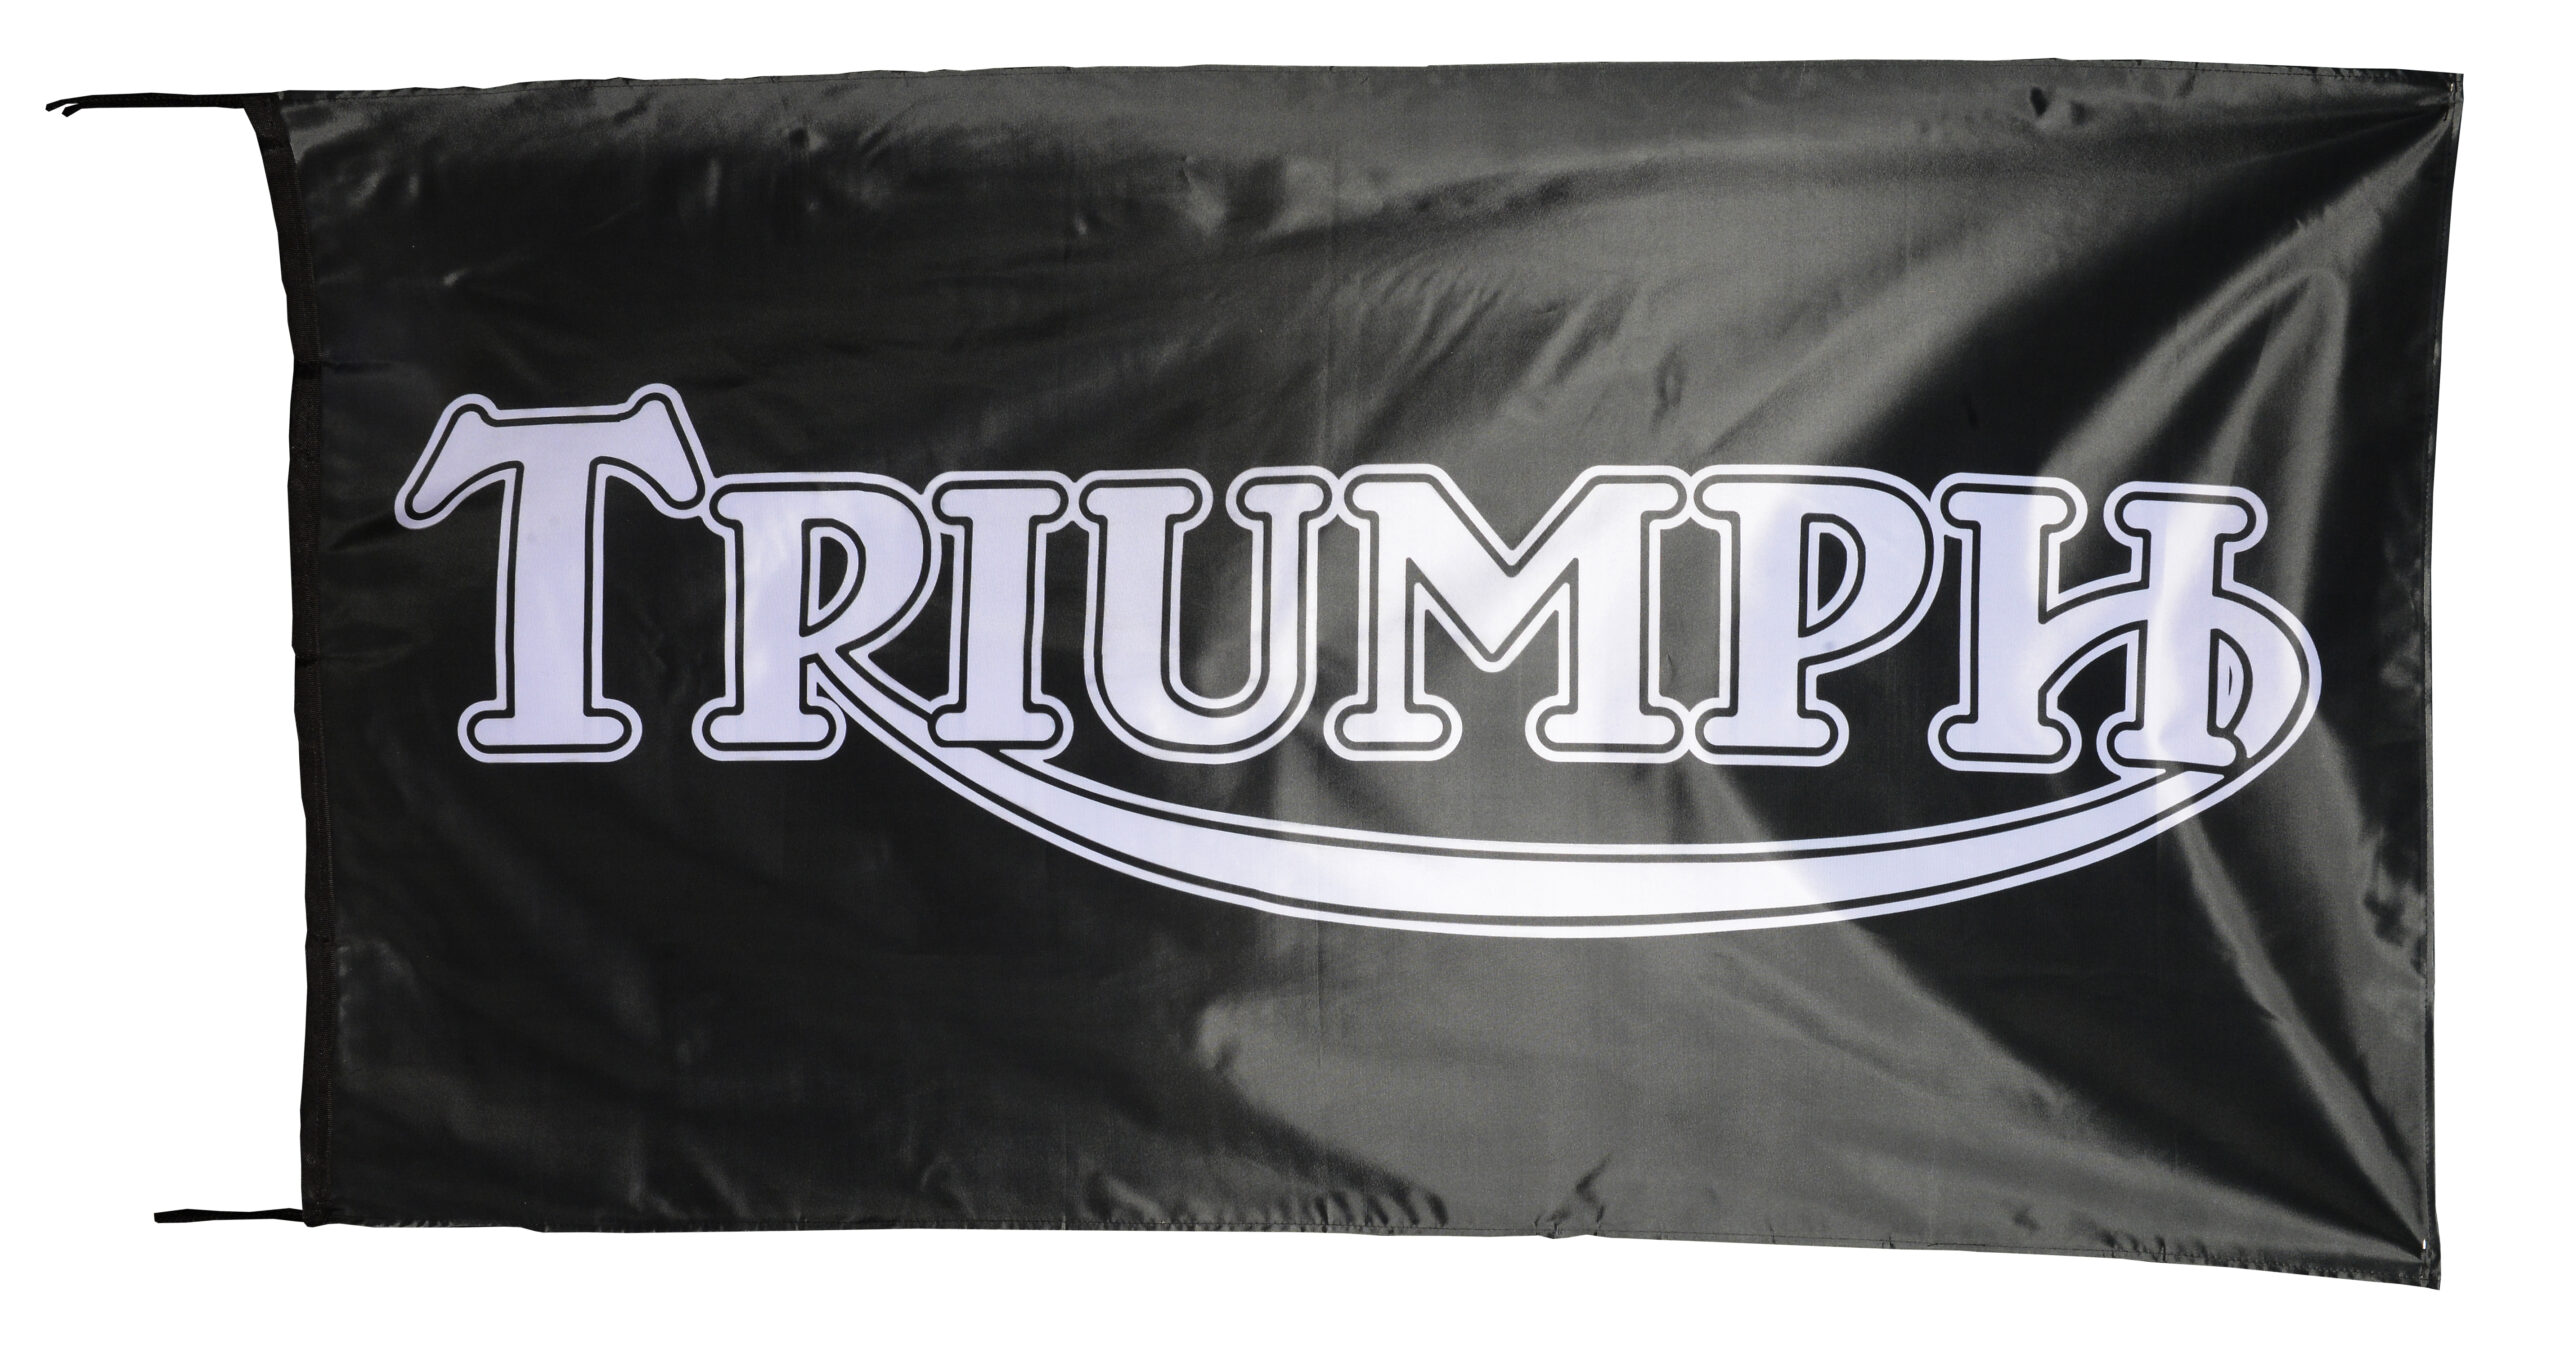 Flag  Triumph Motorcycles #01 Black Landscape Flag / Banner 5 X 3 Ft (150 x 90 cm) Motorcycle Flags